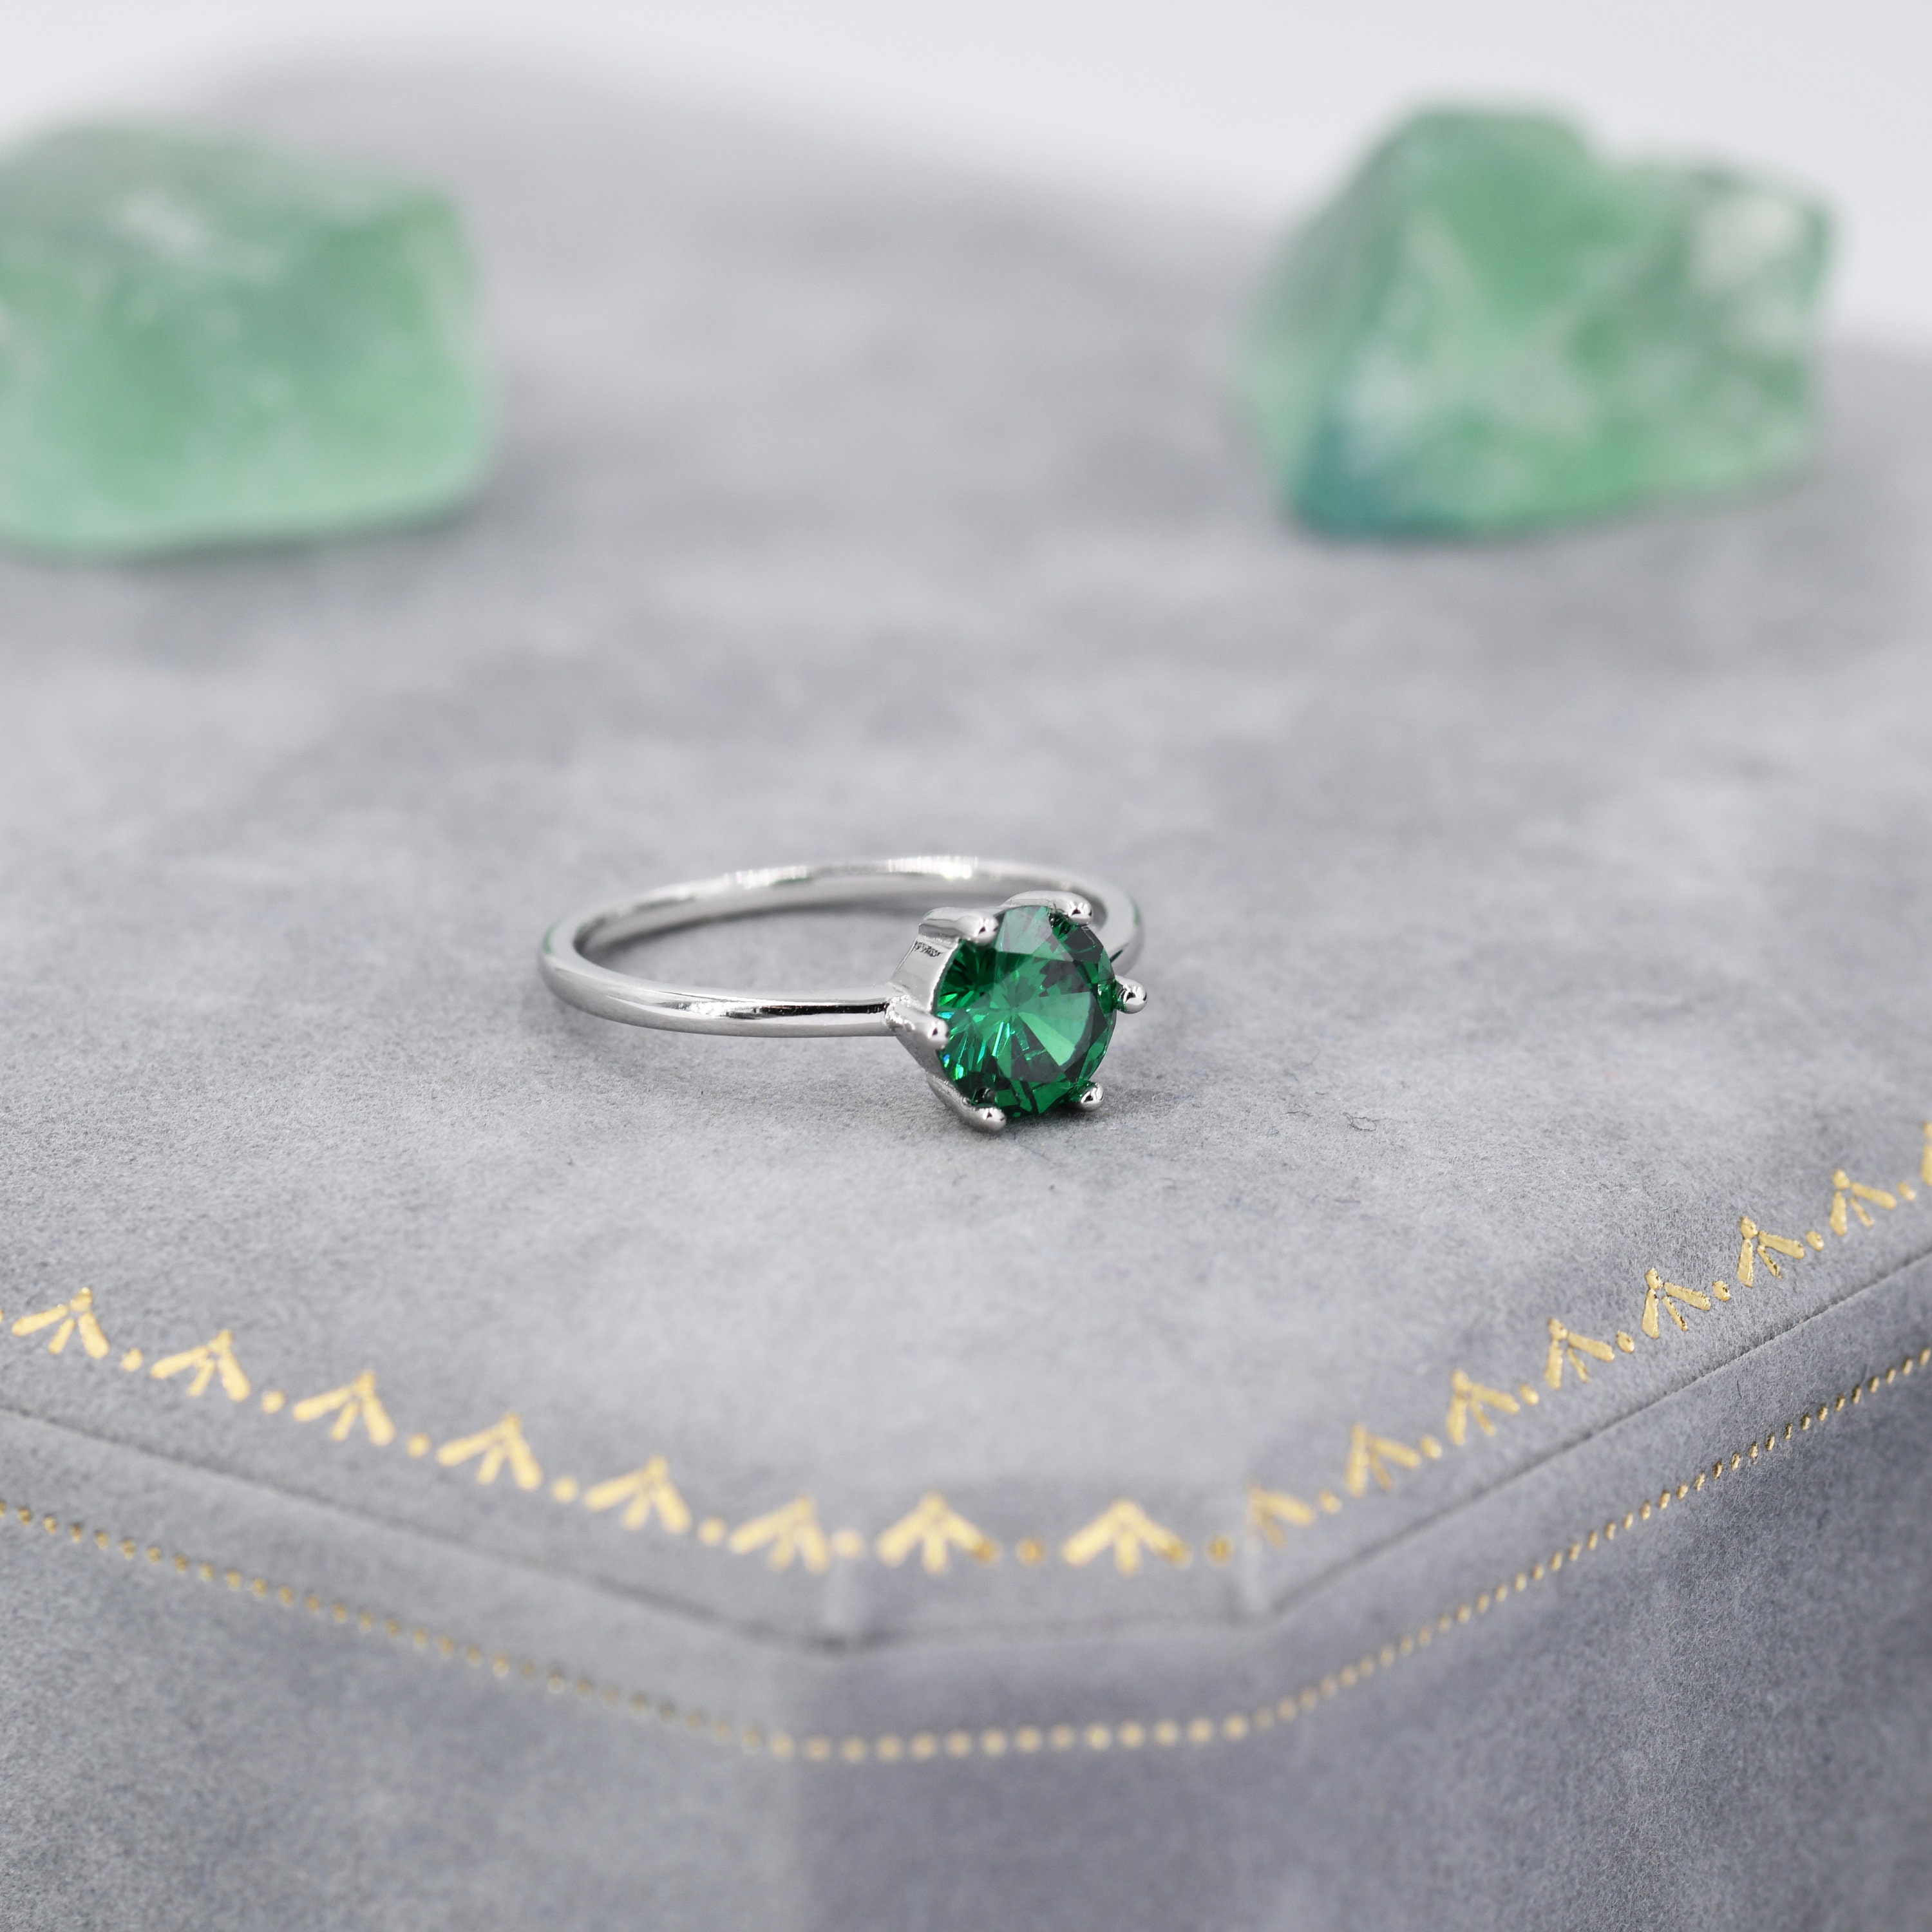 1 Carat Emerald Green CZ Brilliant Cut Ring in Sterling Silver